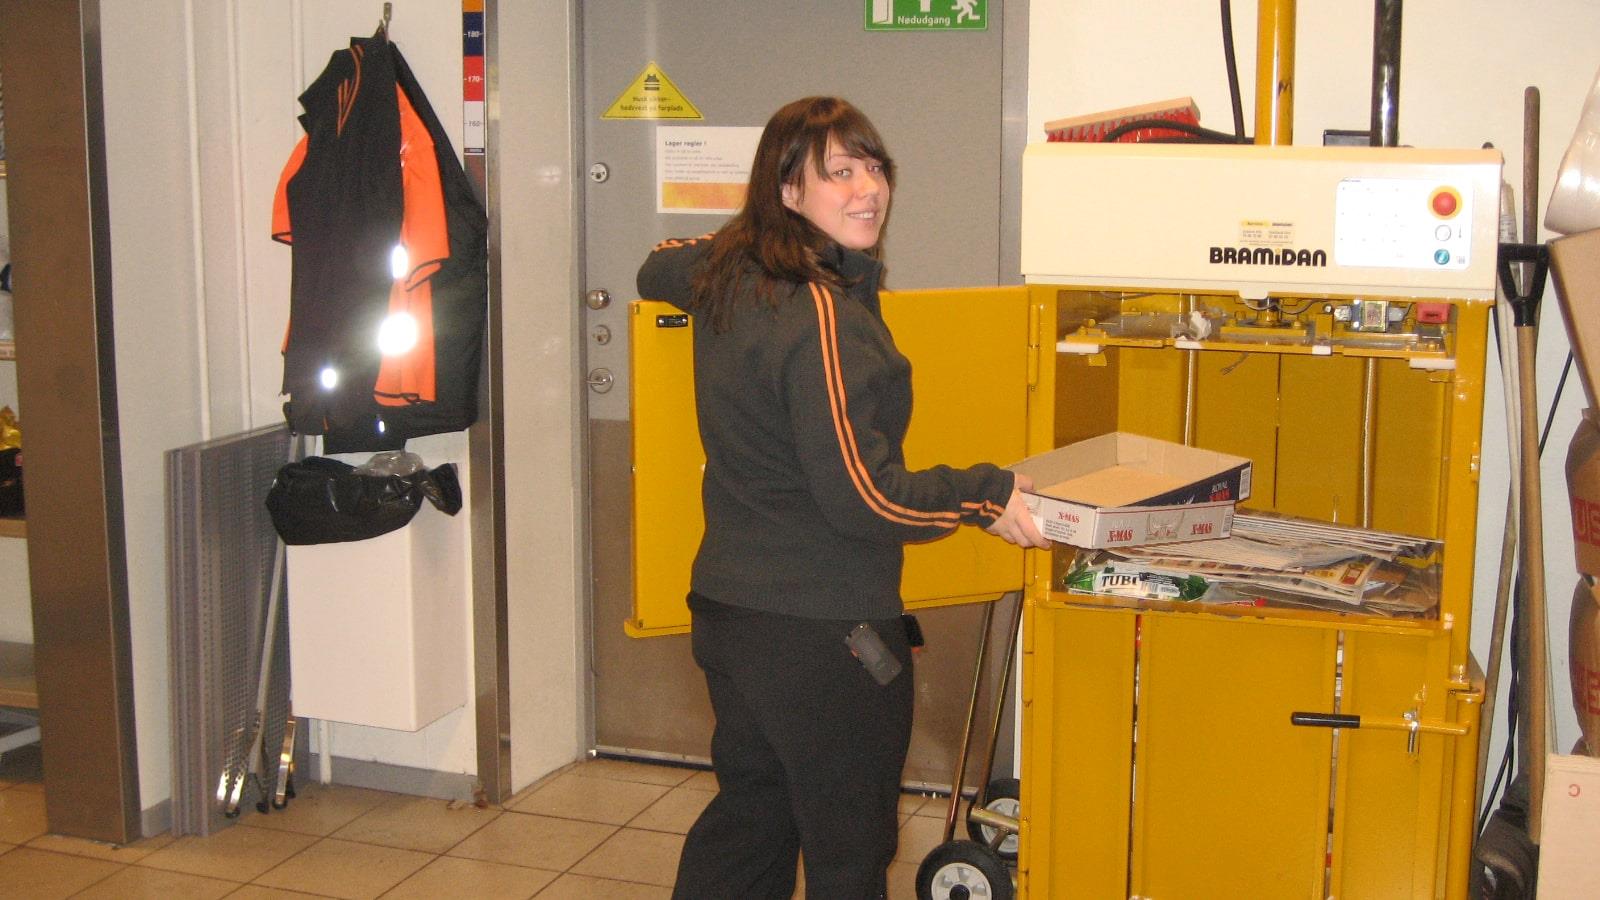 Female Statoil employee fills Bramidan baler with cardboard waste 